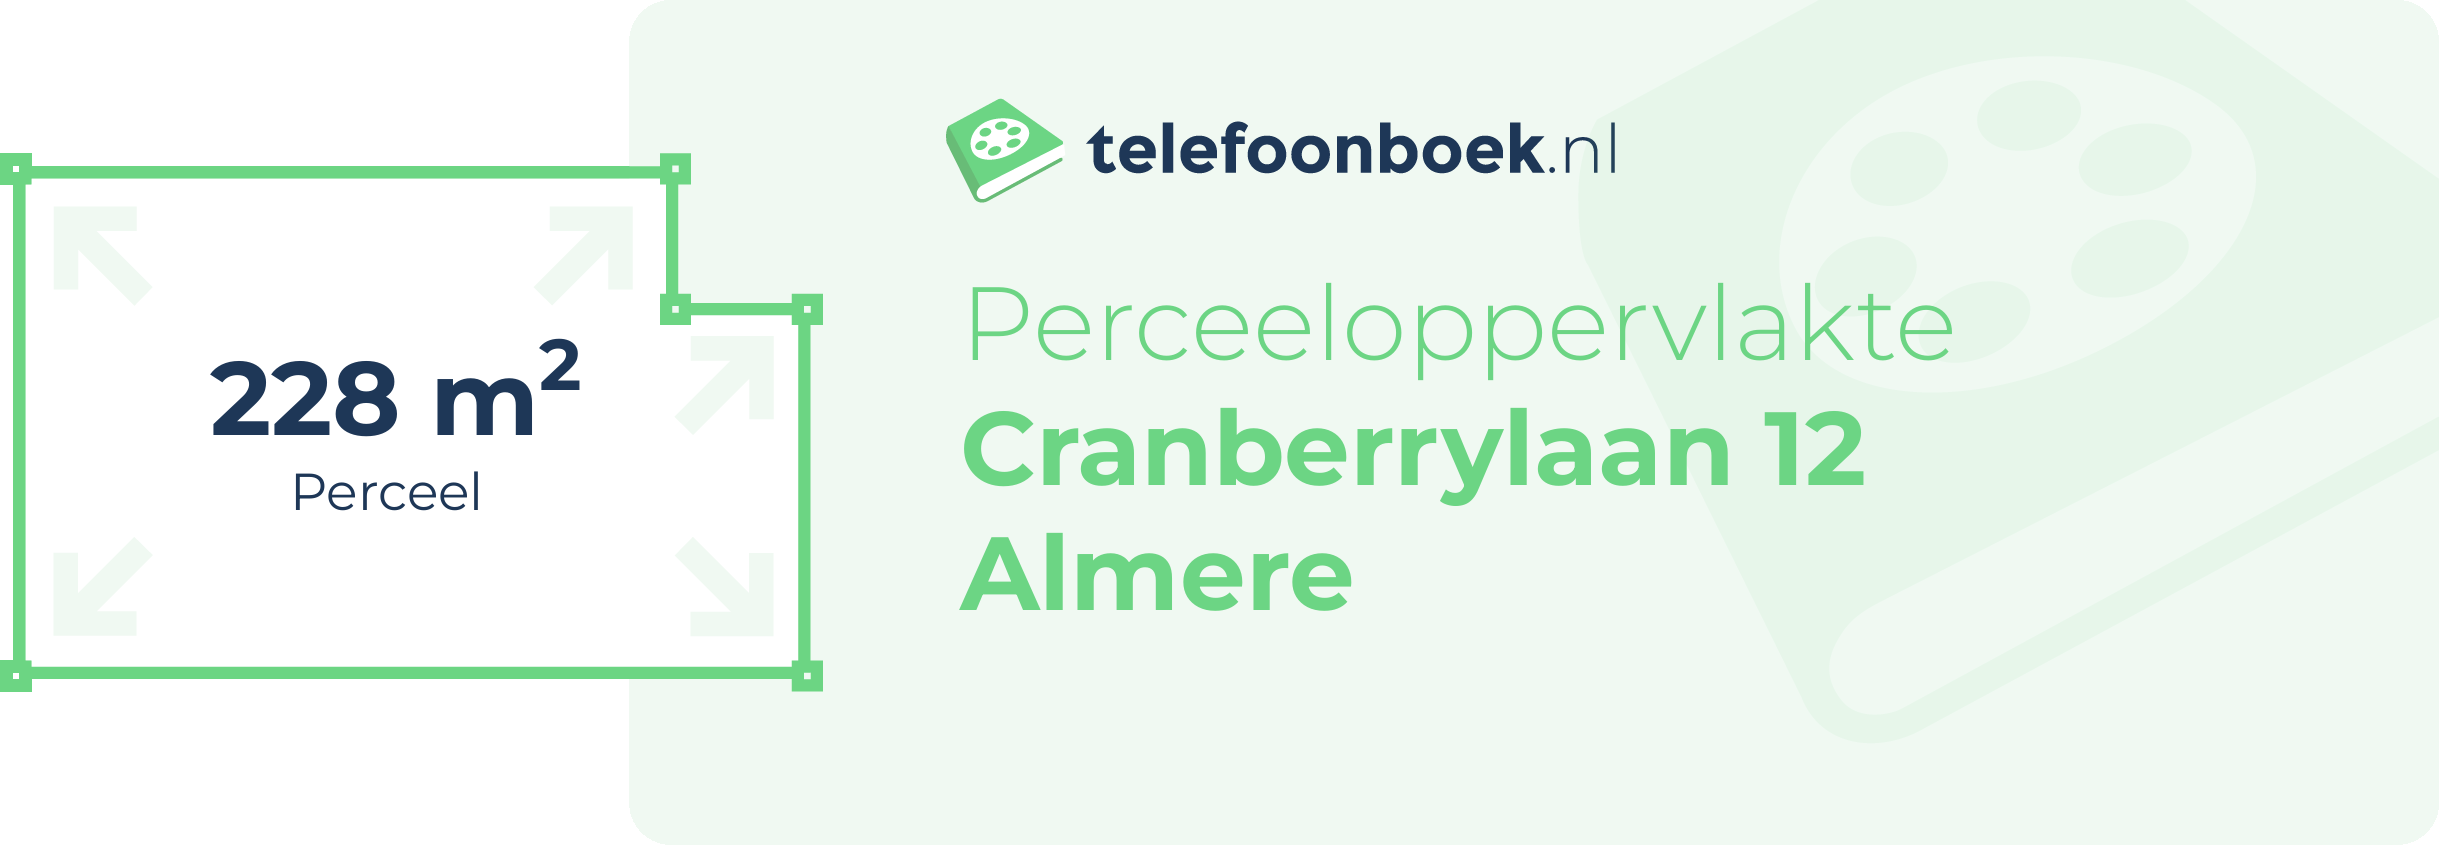 Perceeloppervlakte Cranberrylaan 12 Almere